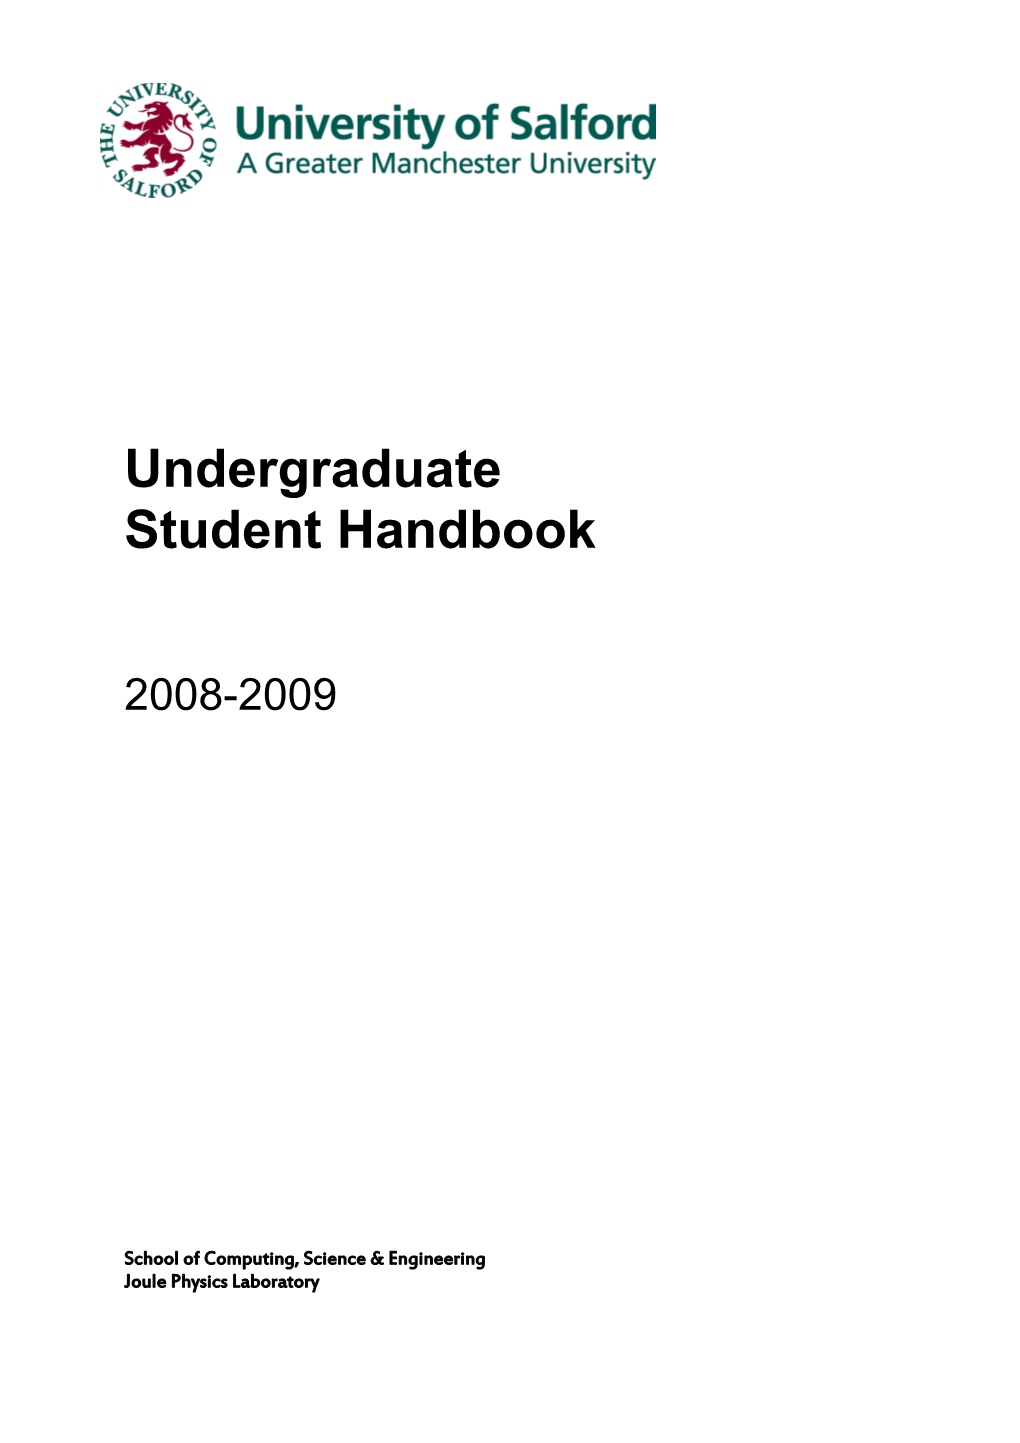 School of Computing, Science and Engineering Student Handbook - 2008/2009